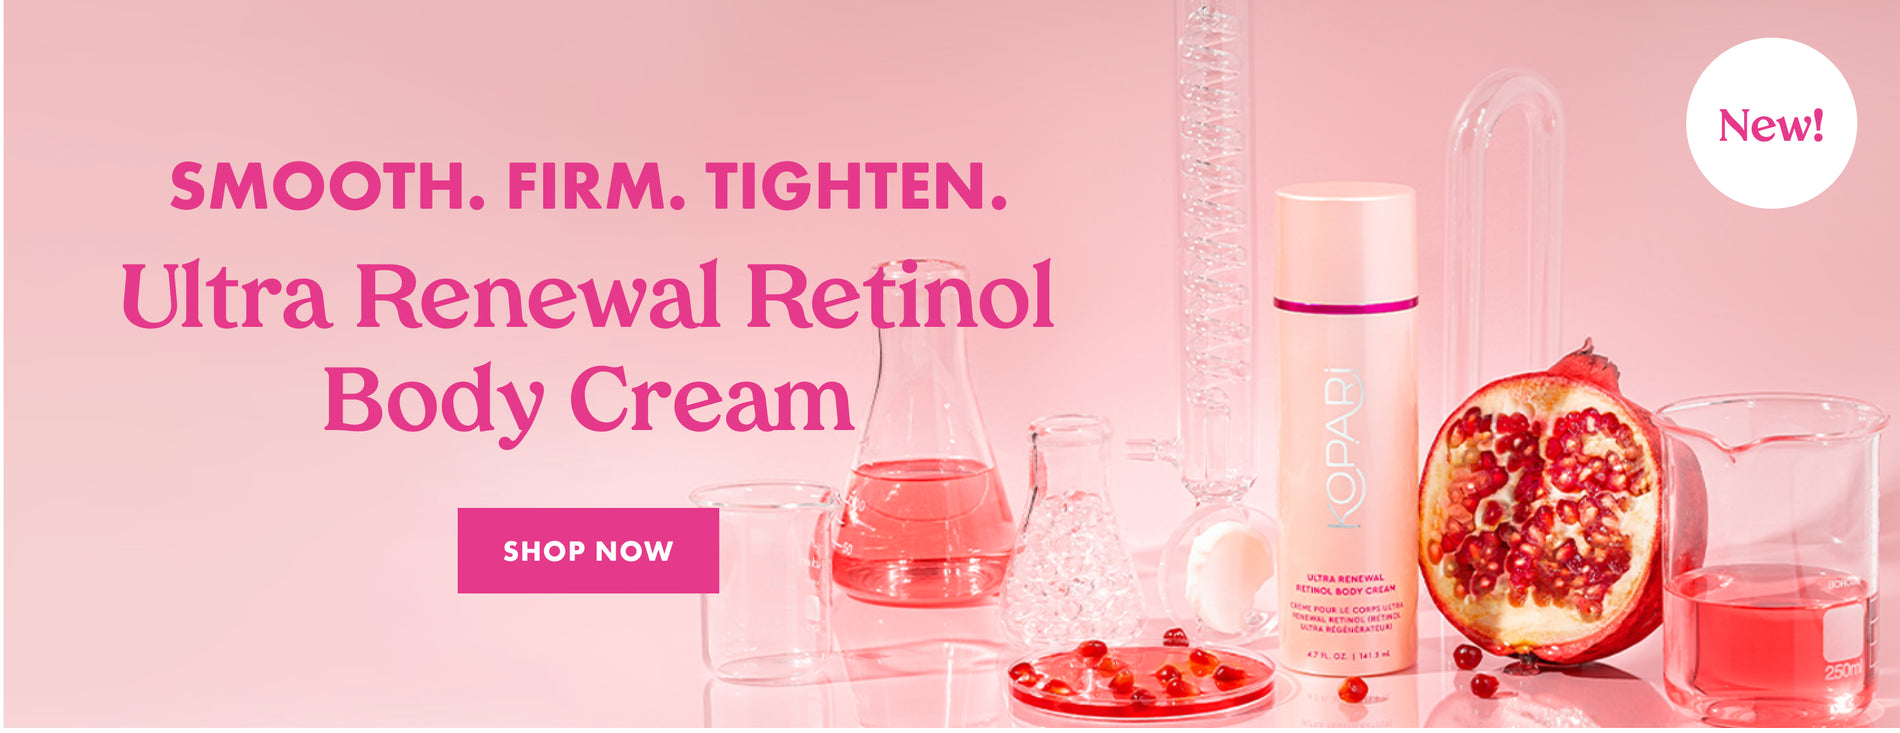 New! Ultra Renewal Retinol Body Cream